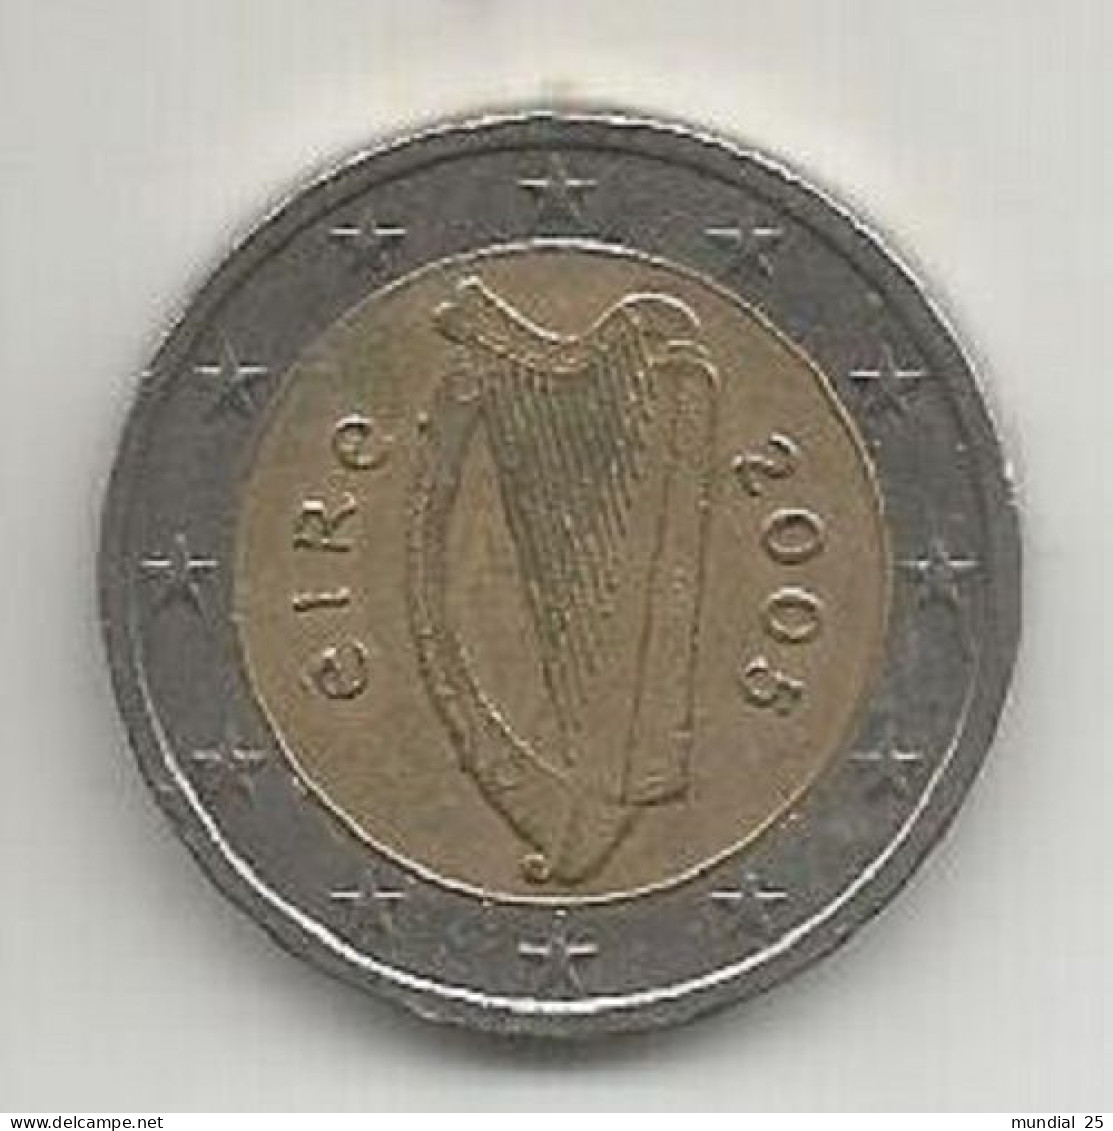 IRELAND 2 EURO 2005 - Irland